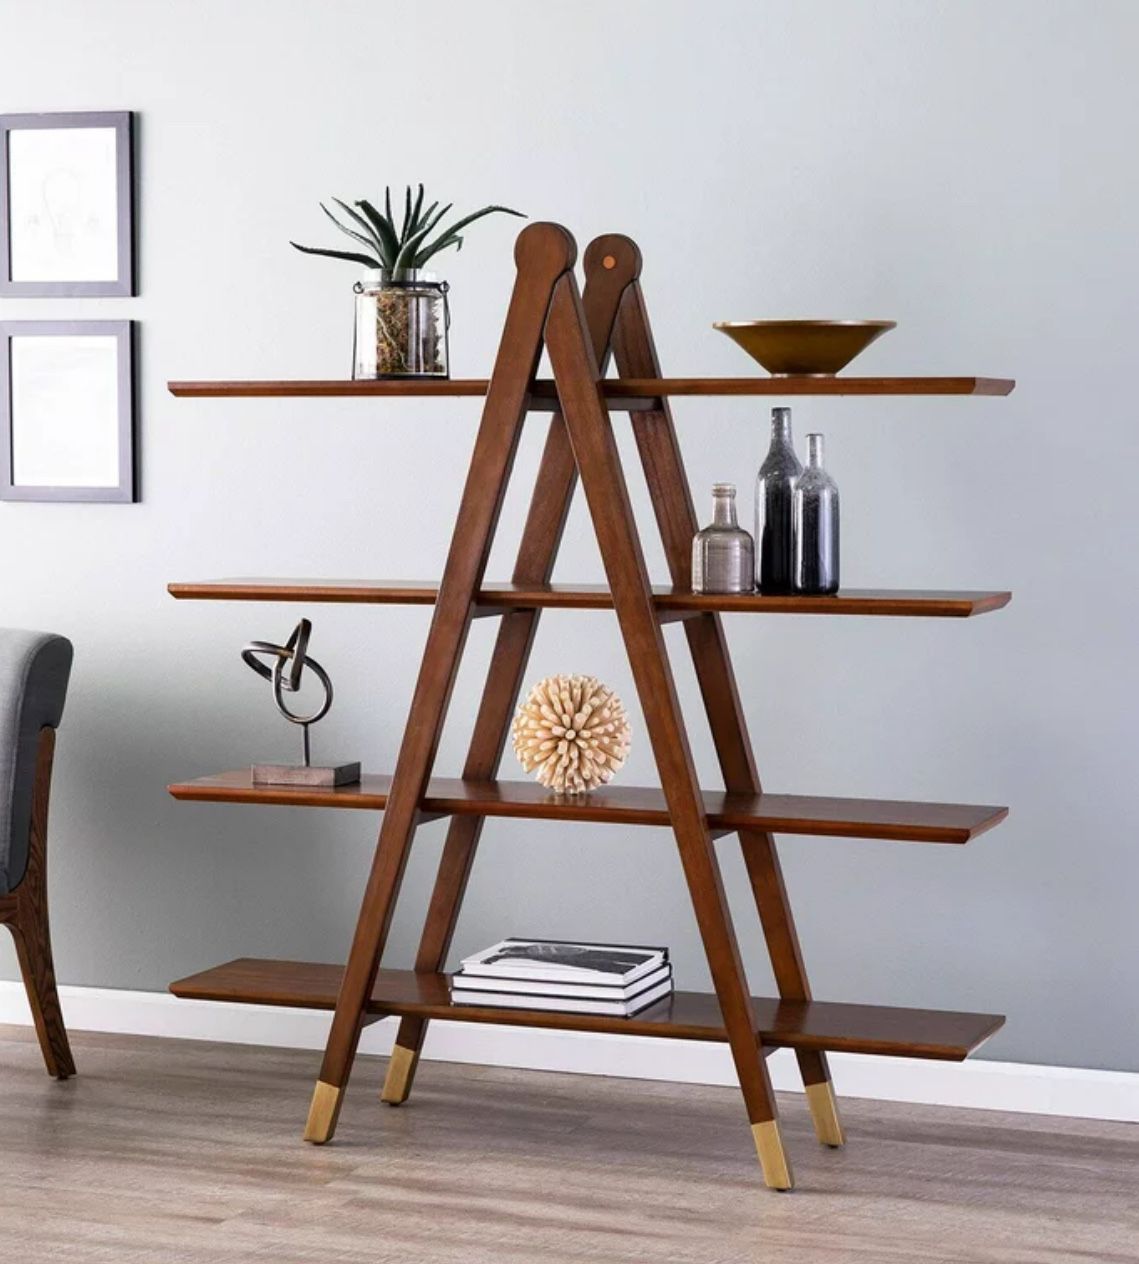 Ladder shelf - $300 OBO, Excellent condition